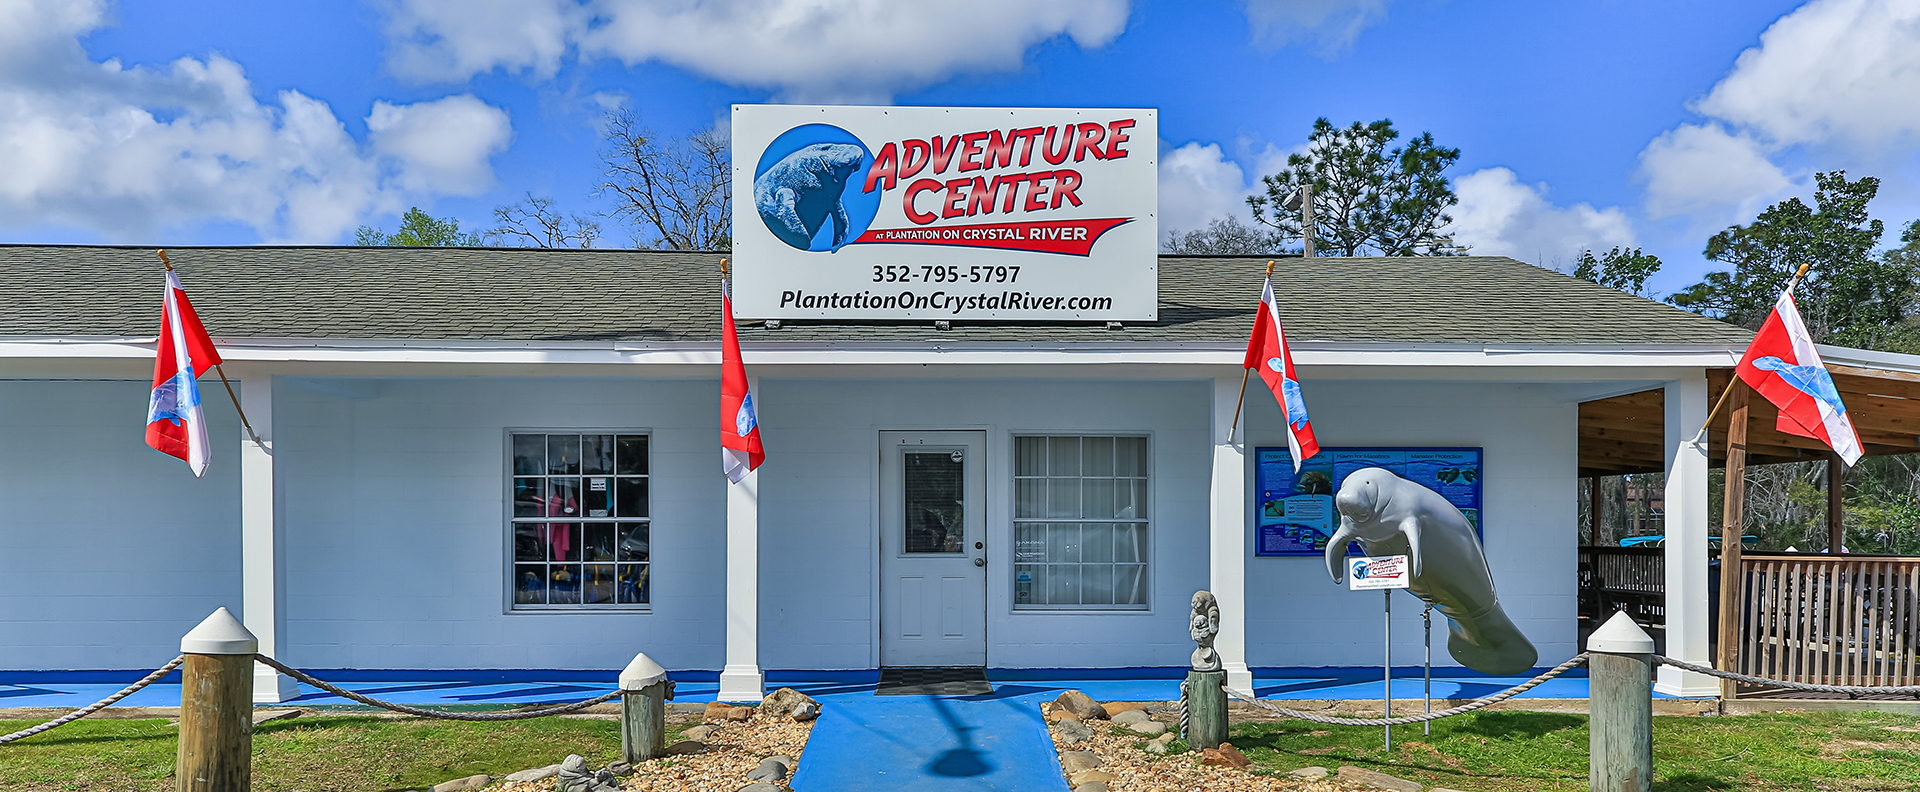 plantationcrystalriver adventurecenter header